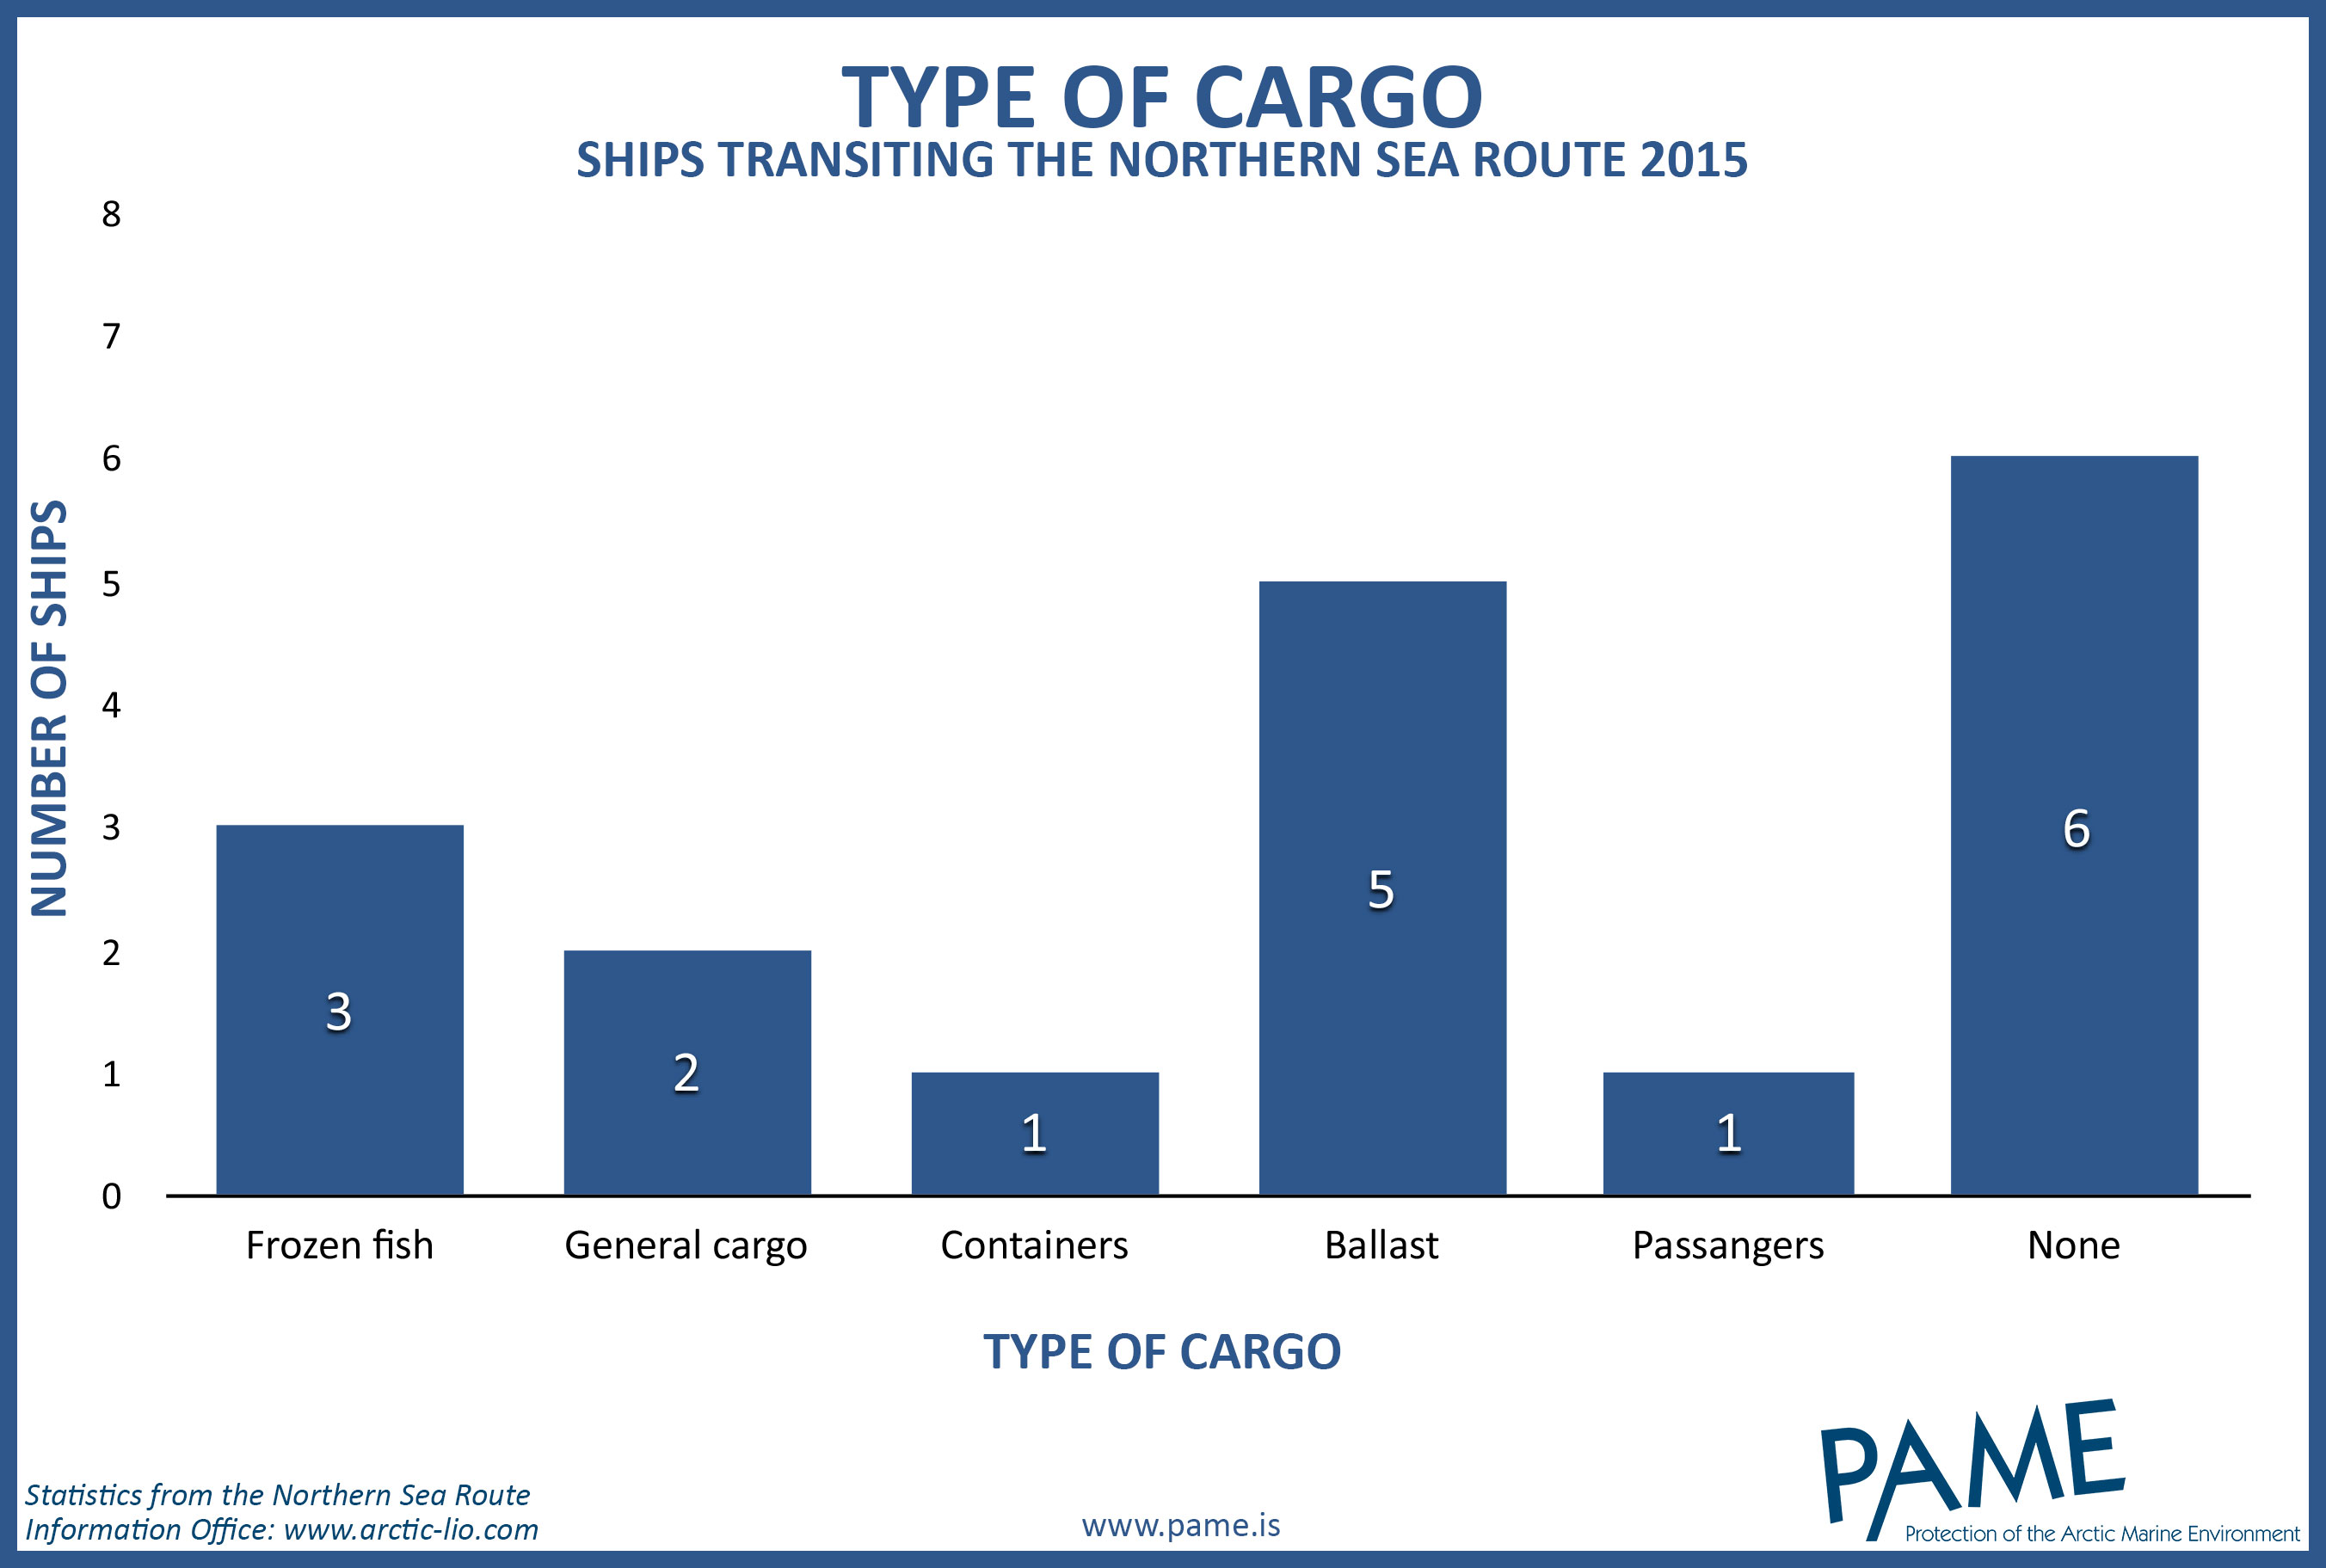 types of cargo 2015